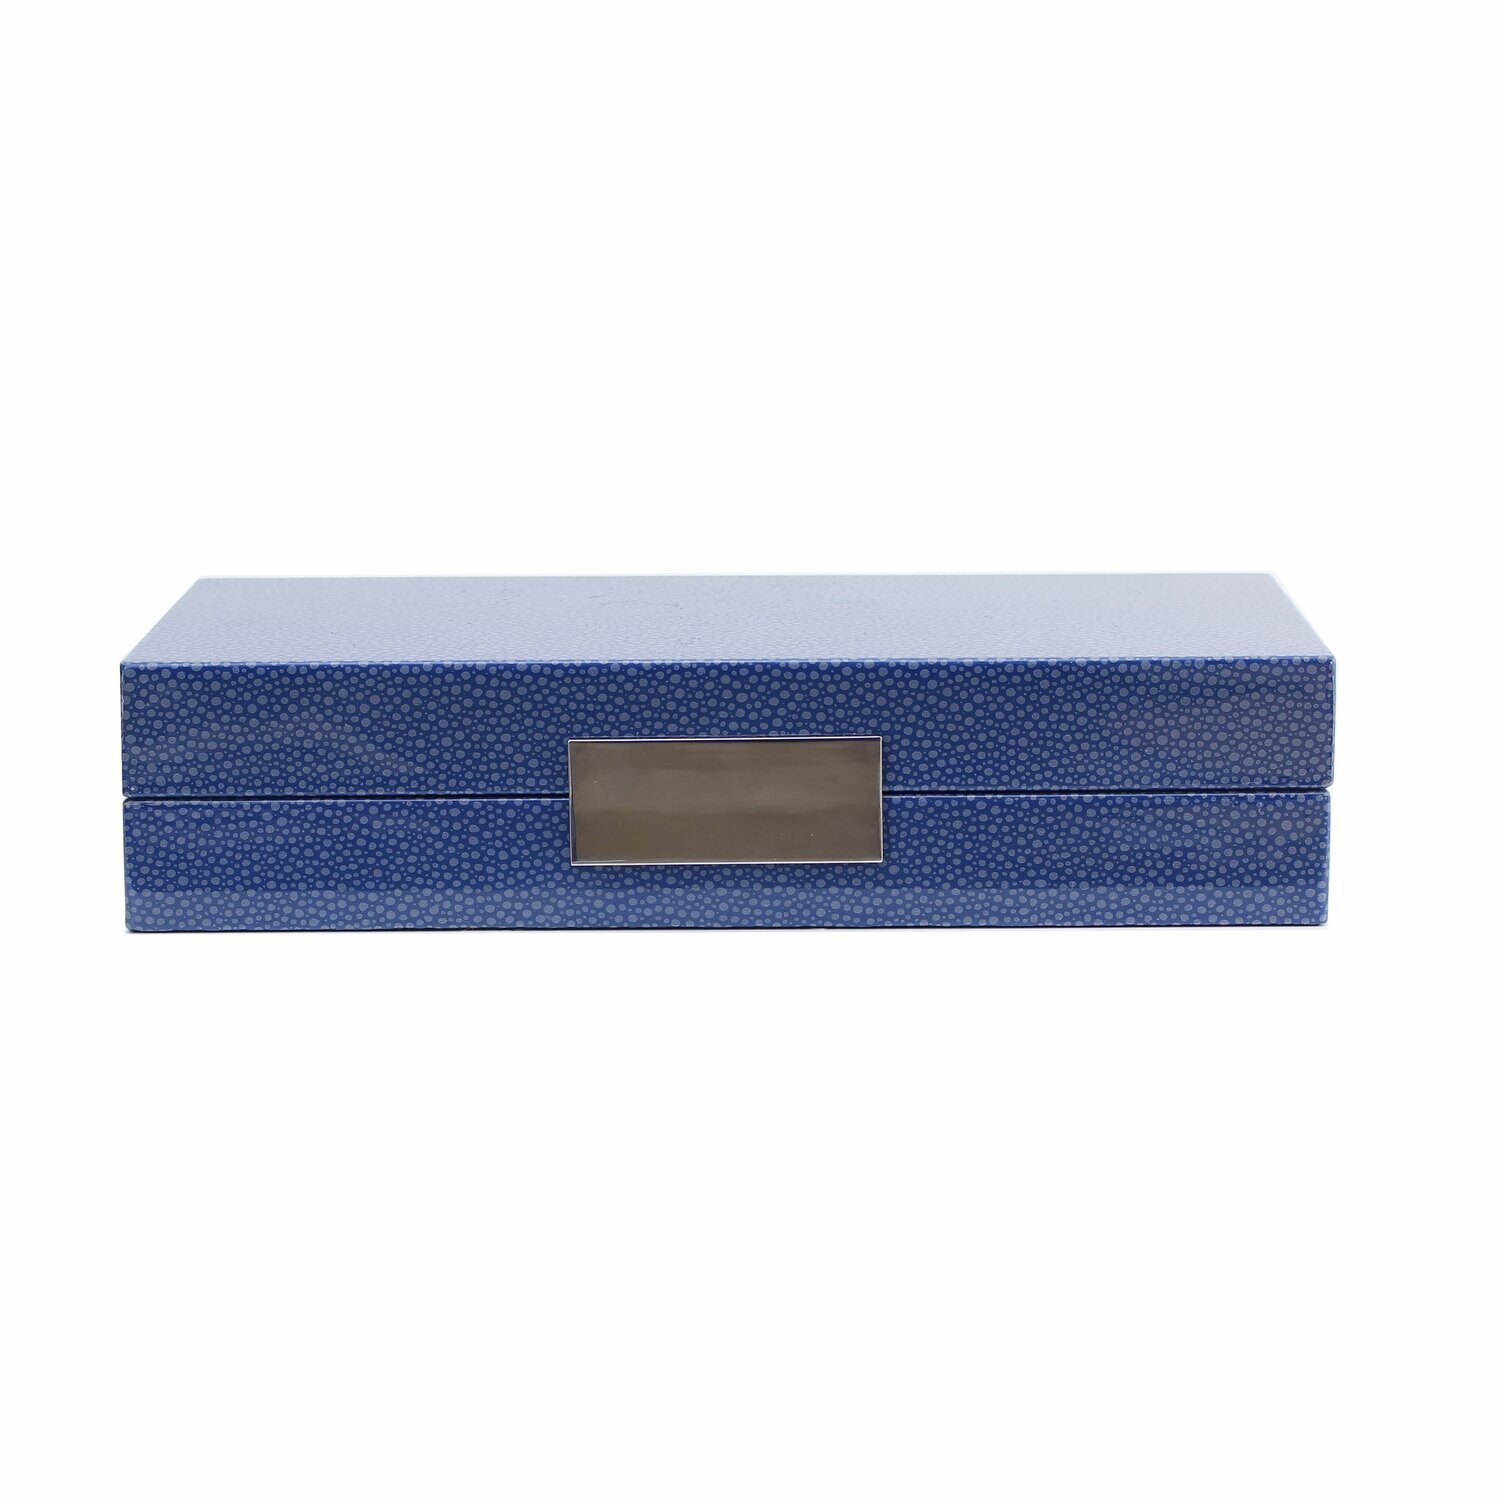 Addison Ross Box Blue Shagreen Gold J 4 x 9 Inch Lacquer BX1321J